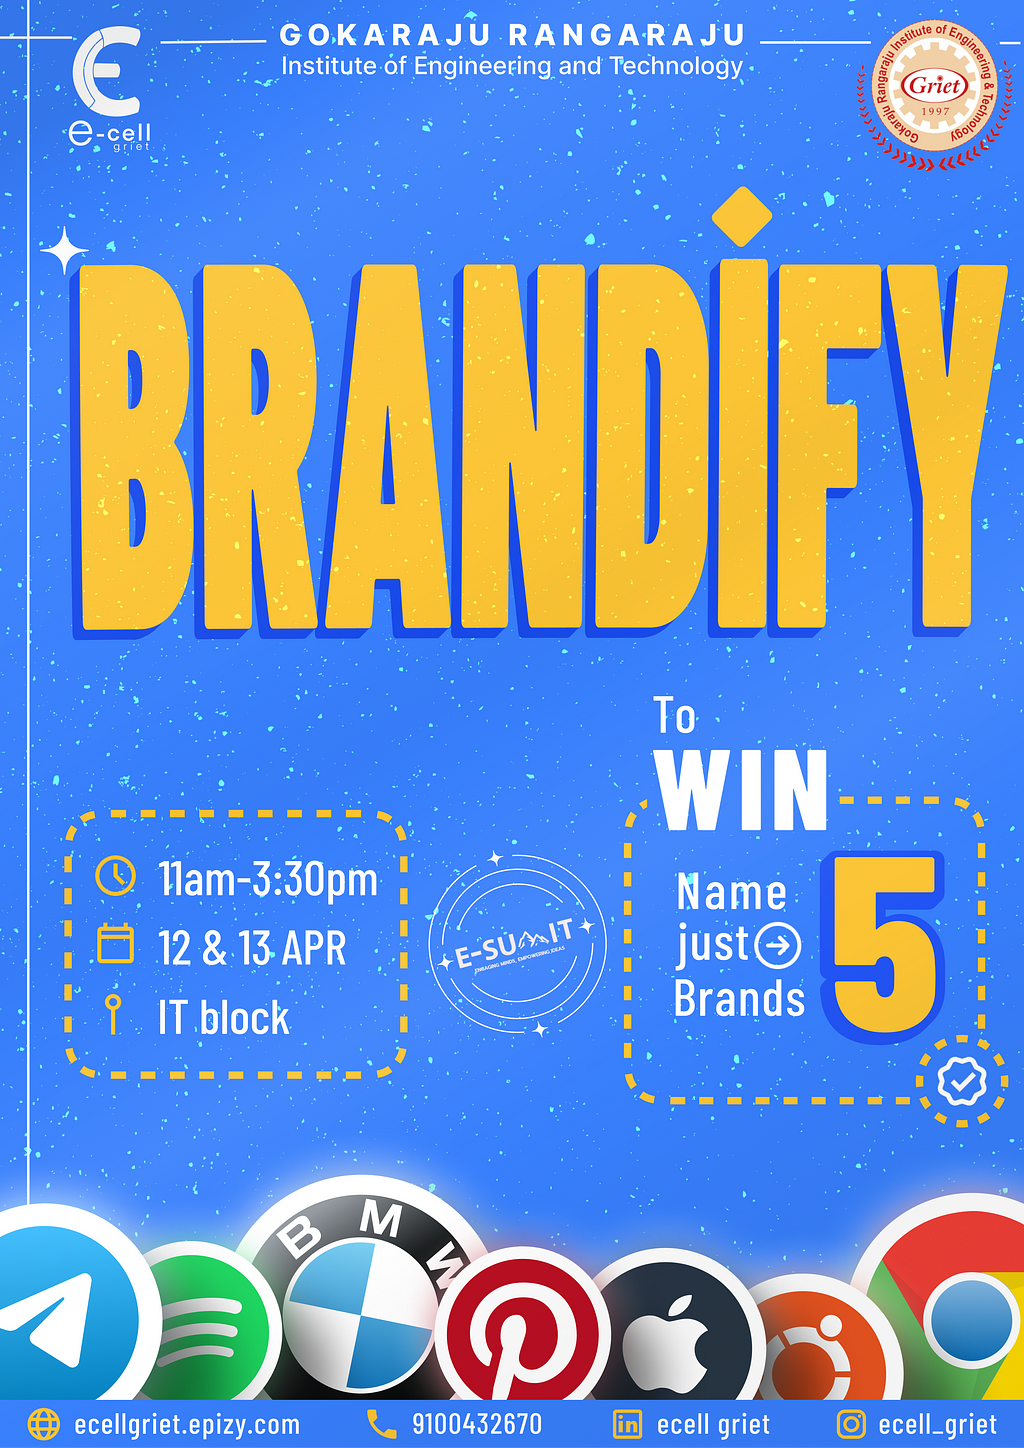 Brandify